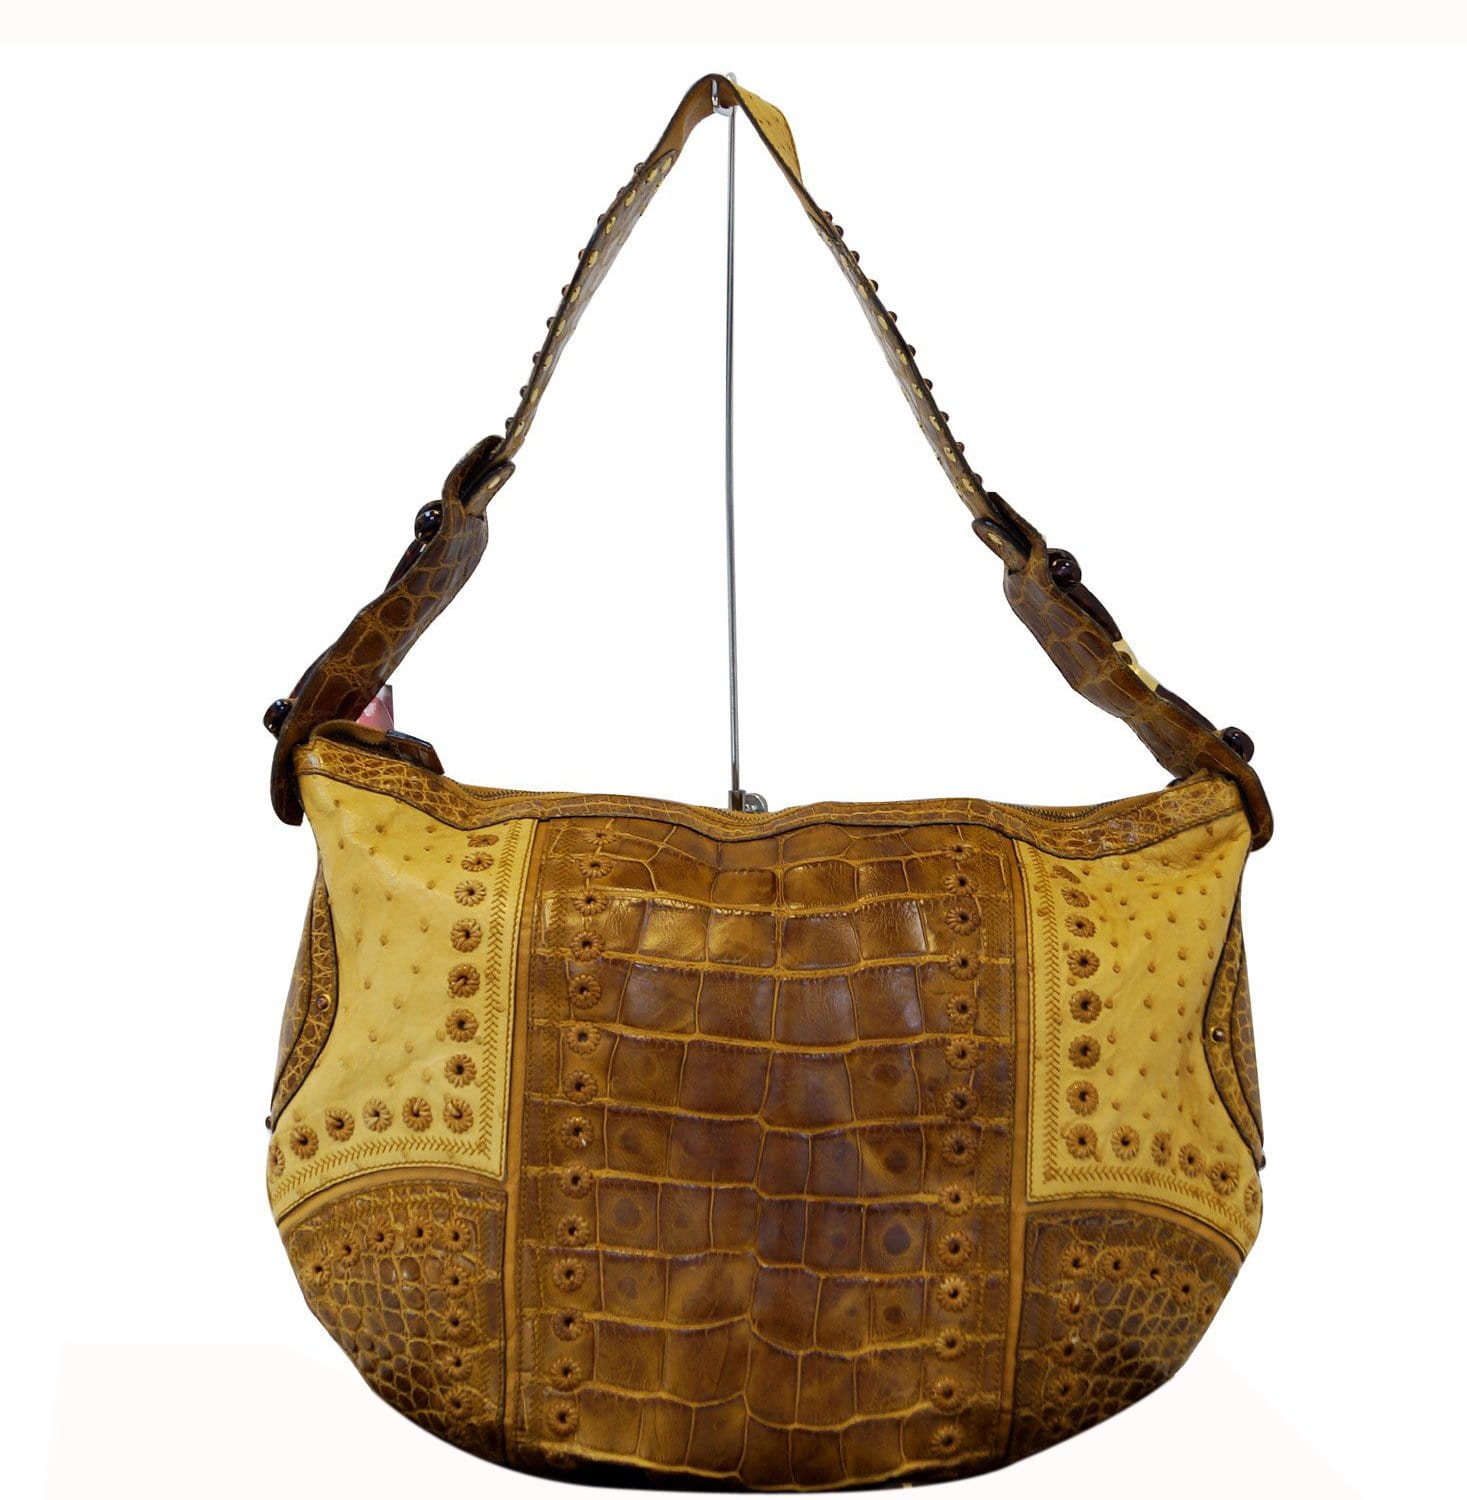 Crocodile Leather Handbags - 453 For Sale on 1stDibs  crocodile bag price,  crocodile leather handbags, vintage crocodile bag